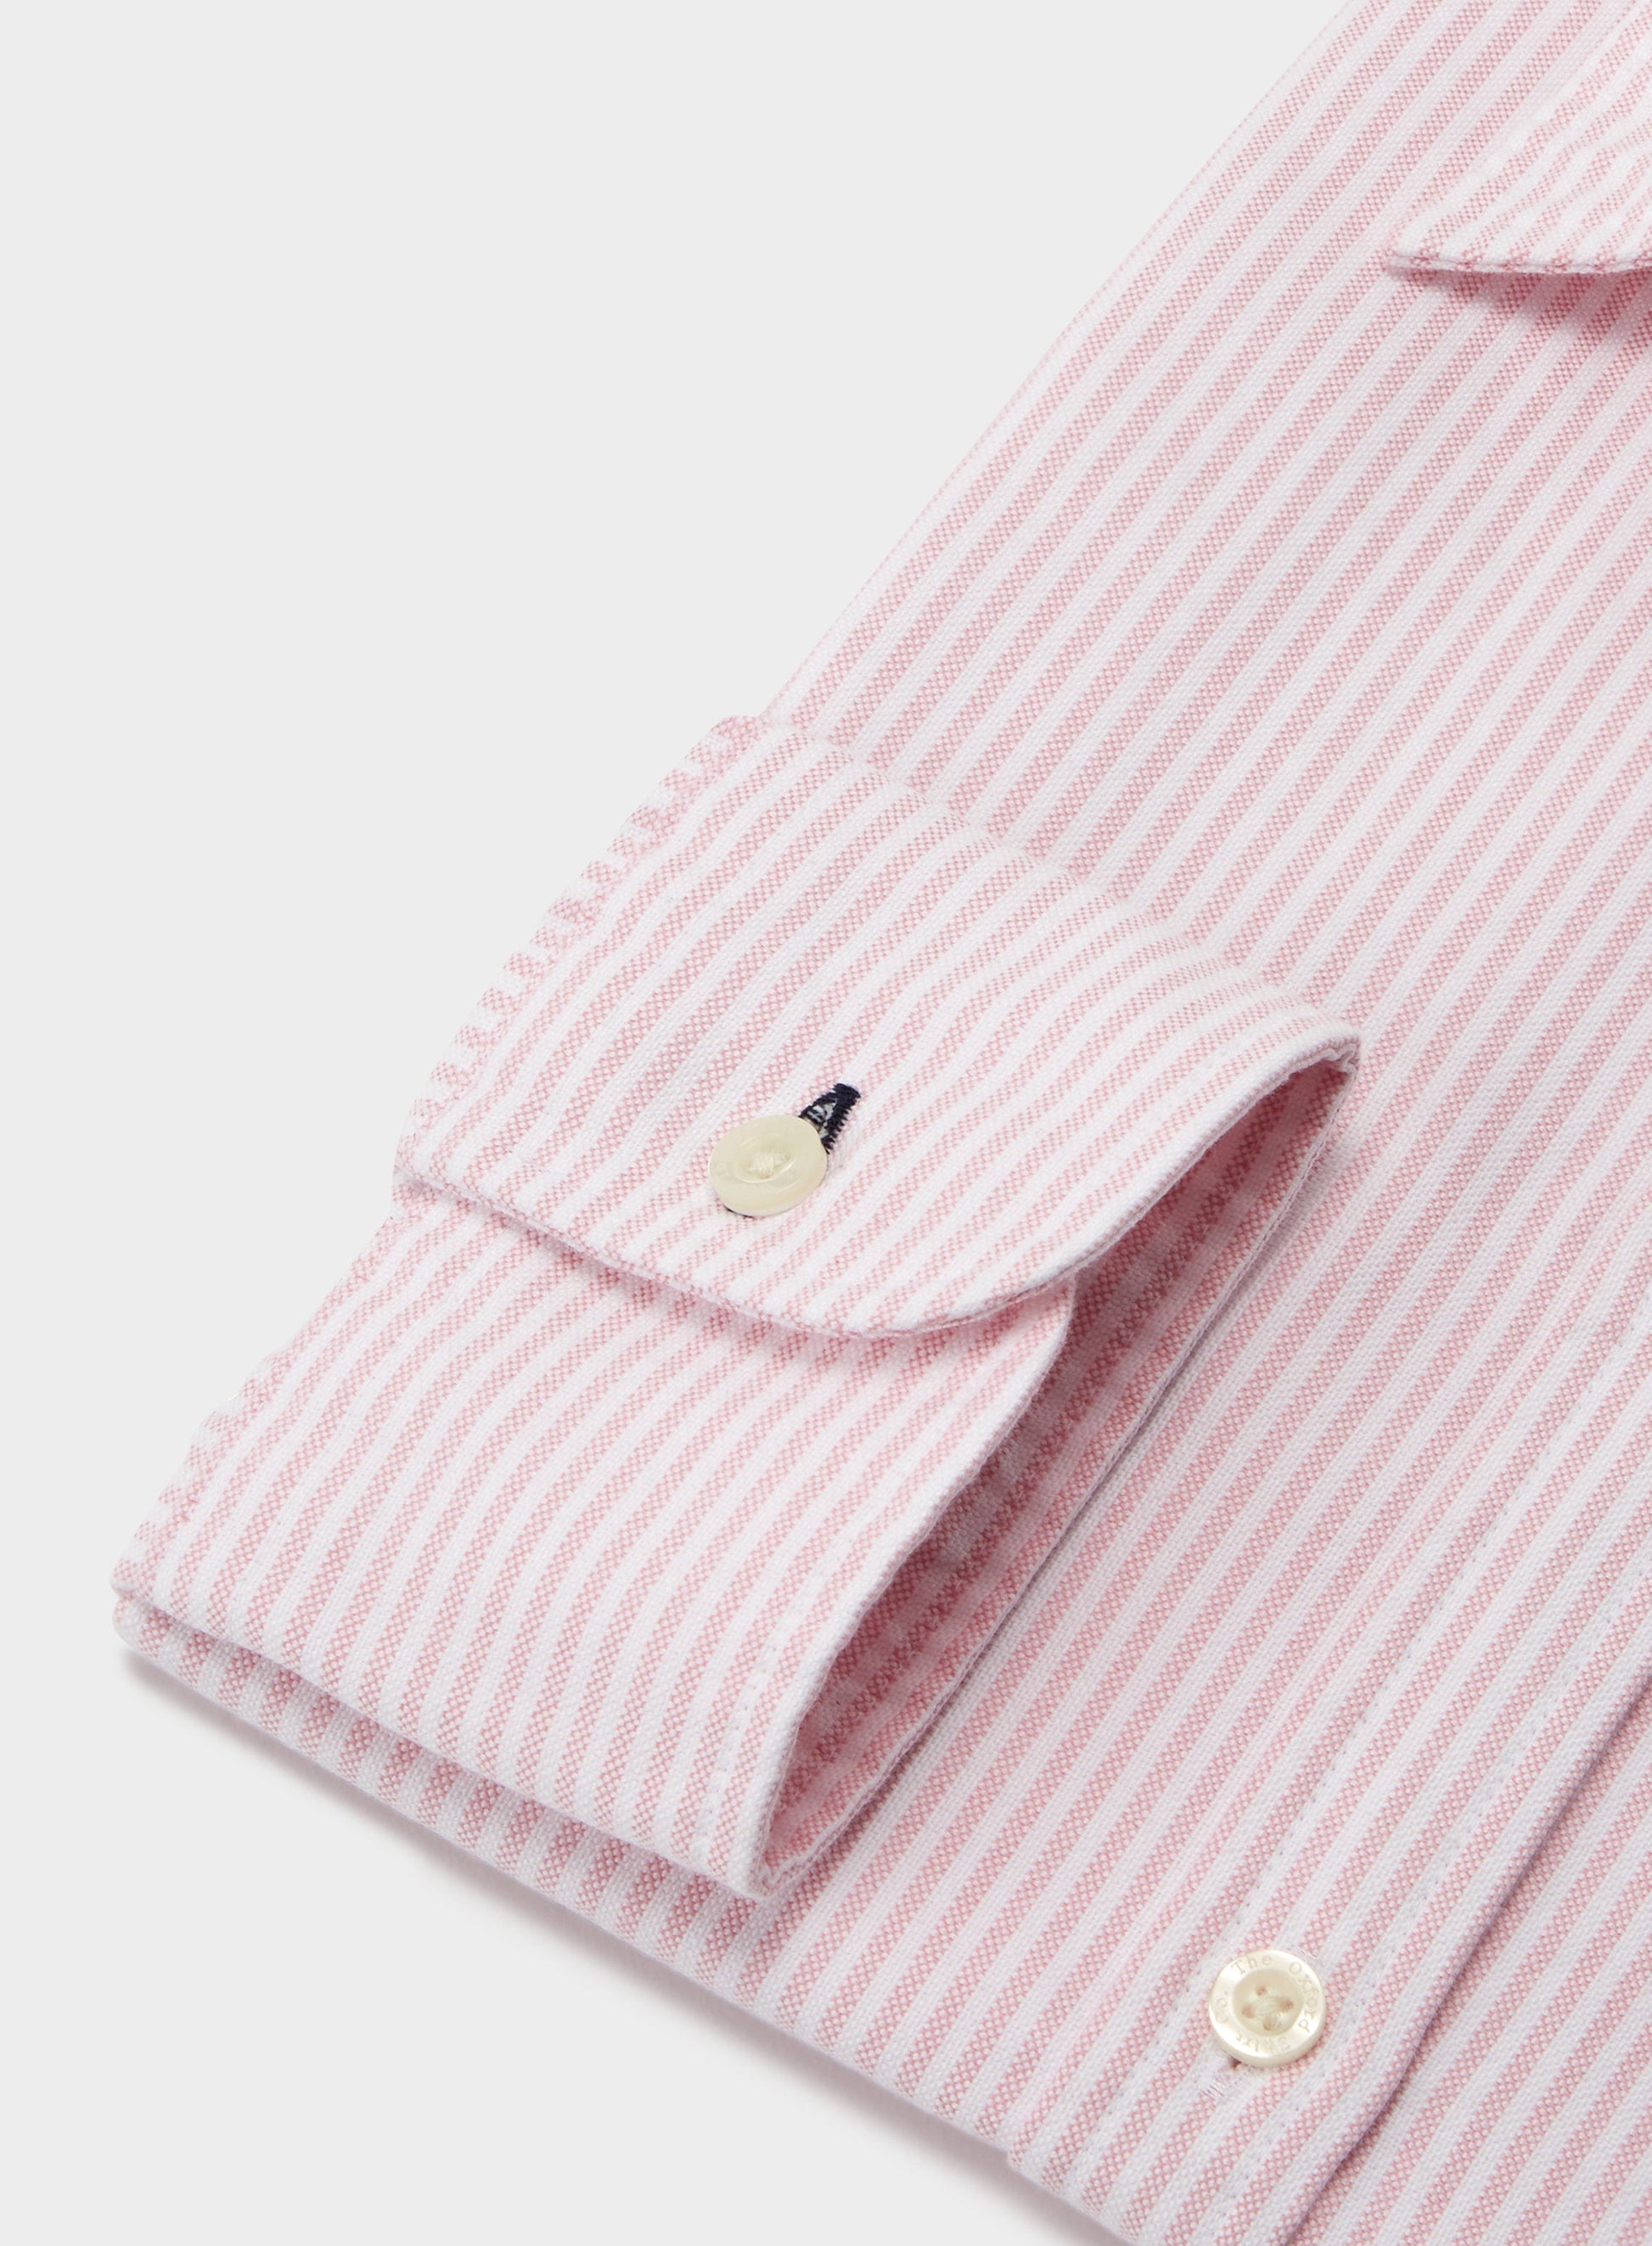 Classic Oxford Shirt - Pink Stripe